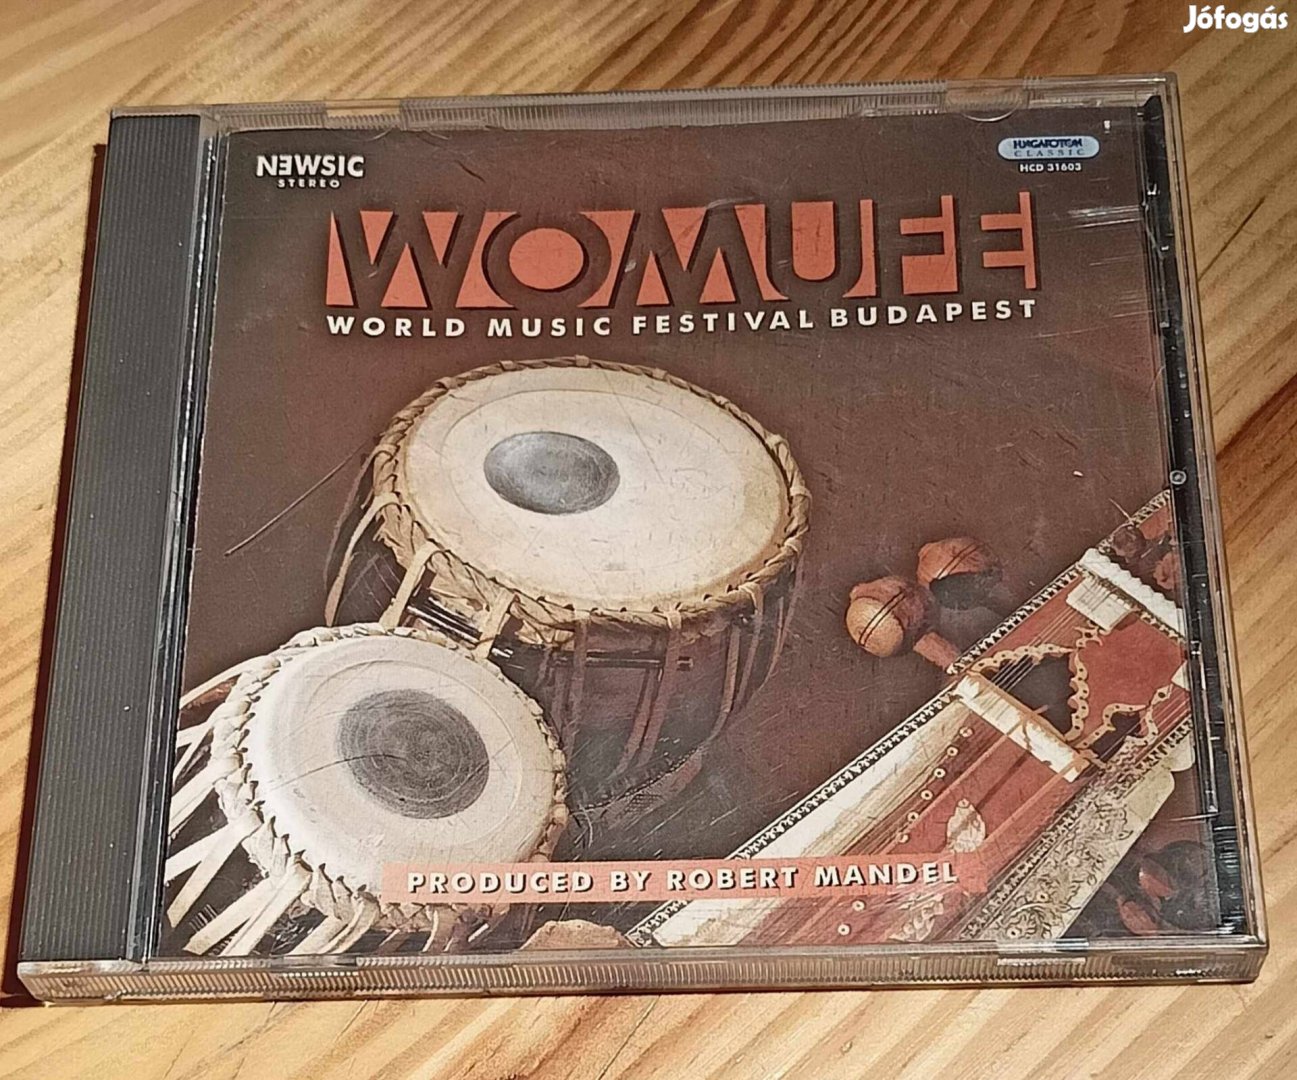 Womufe - World Music Festival Budapest